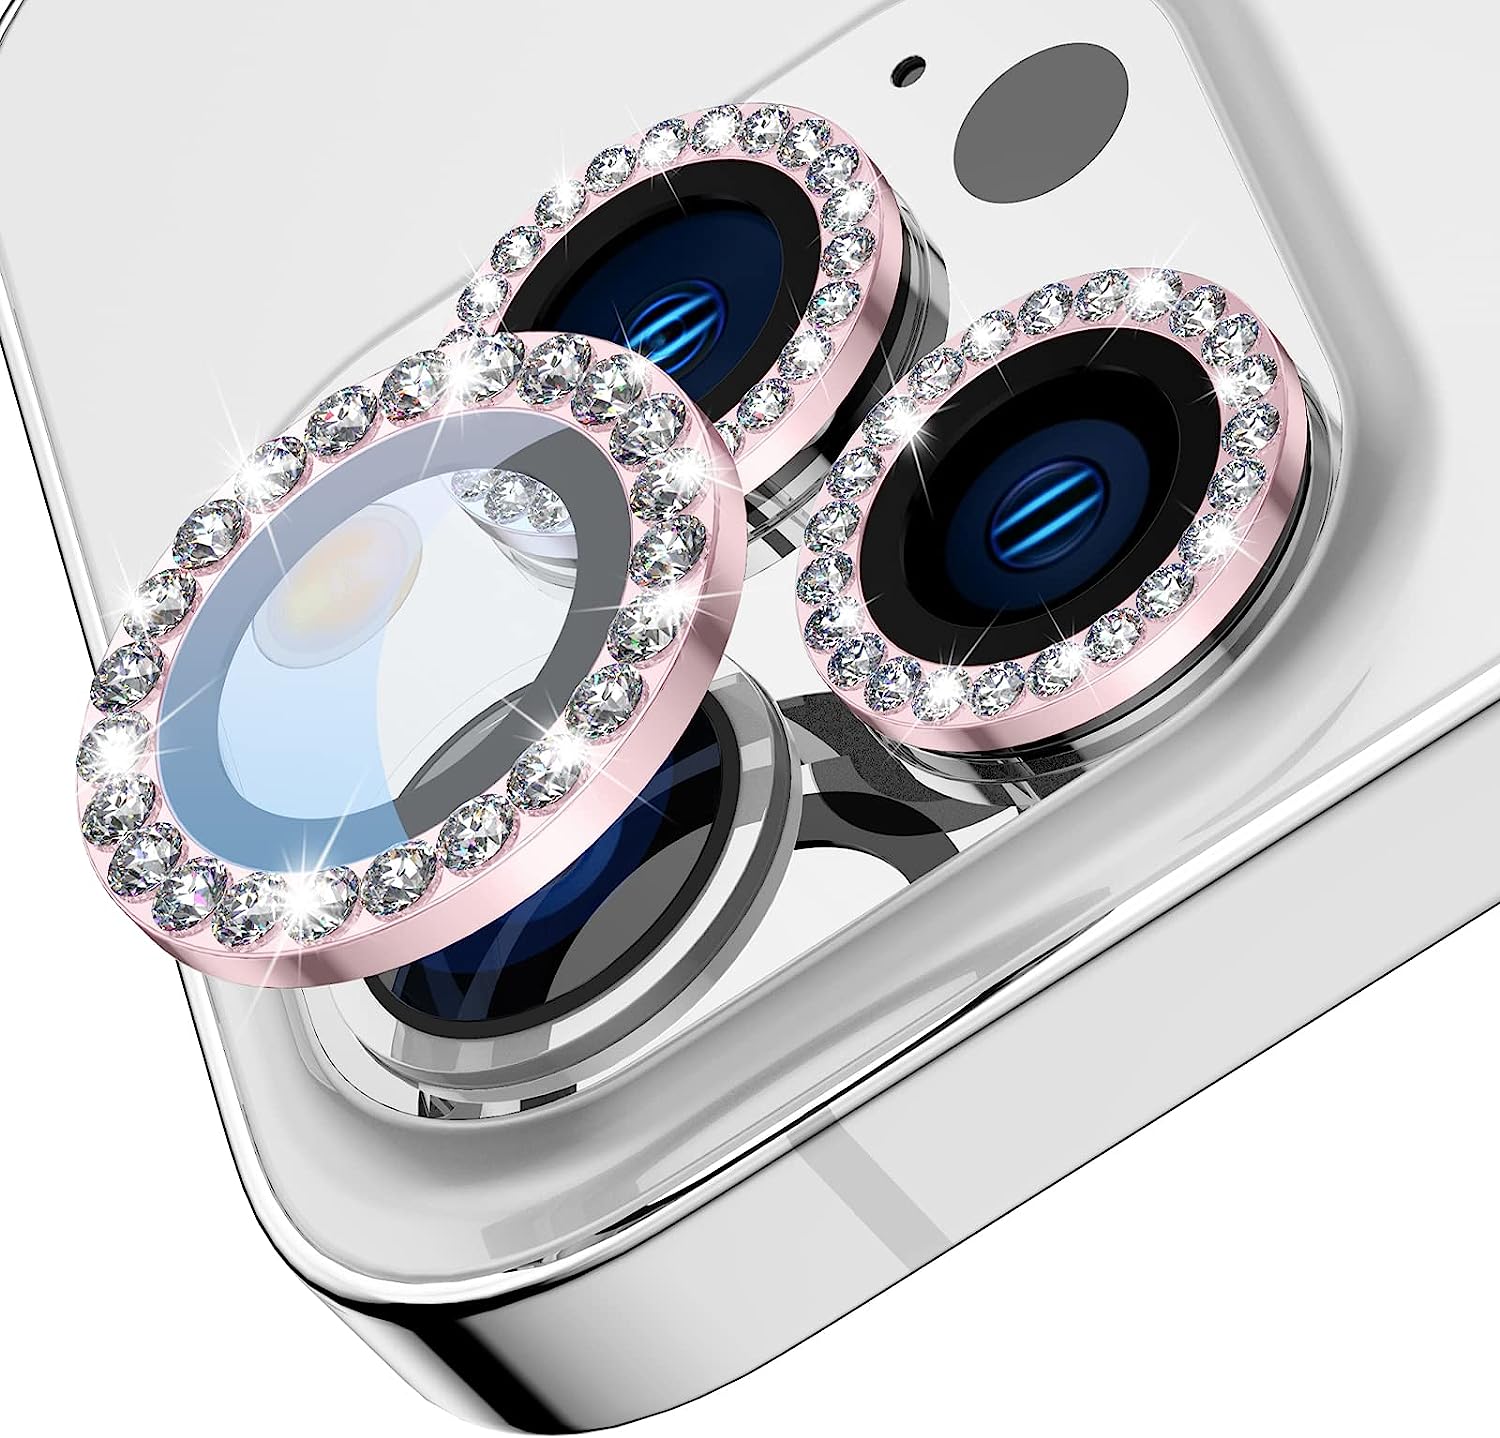 Pink Diamond Phone Camera Lens Protector